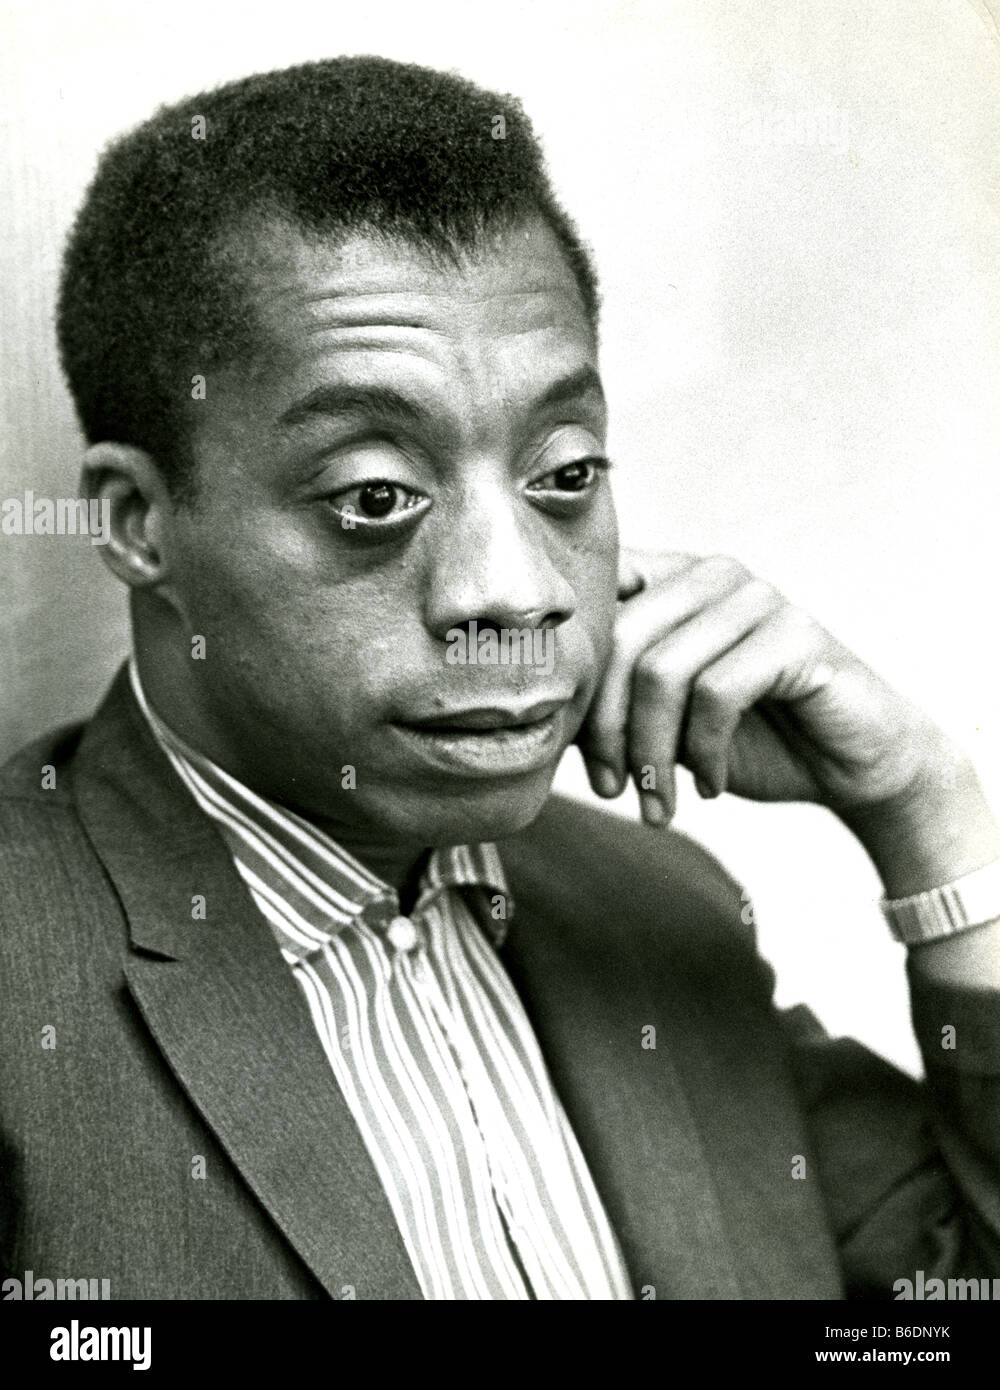 About James Baldwin